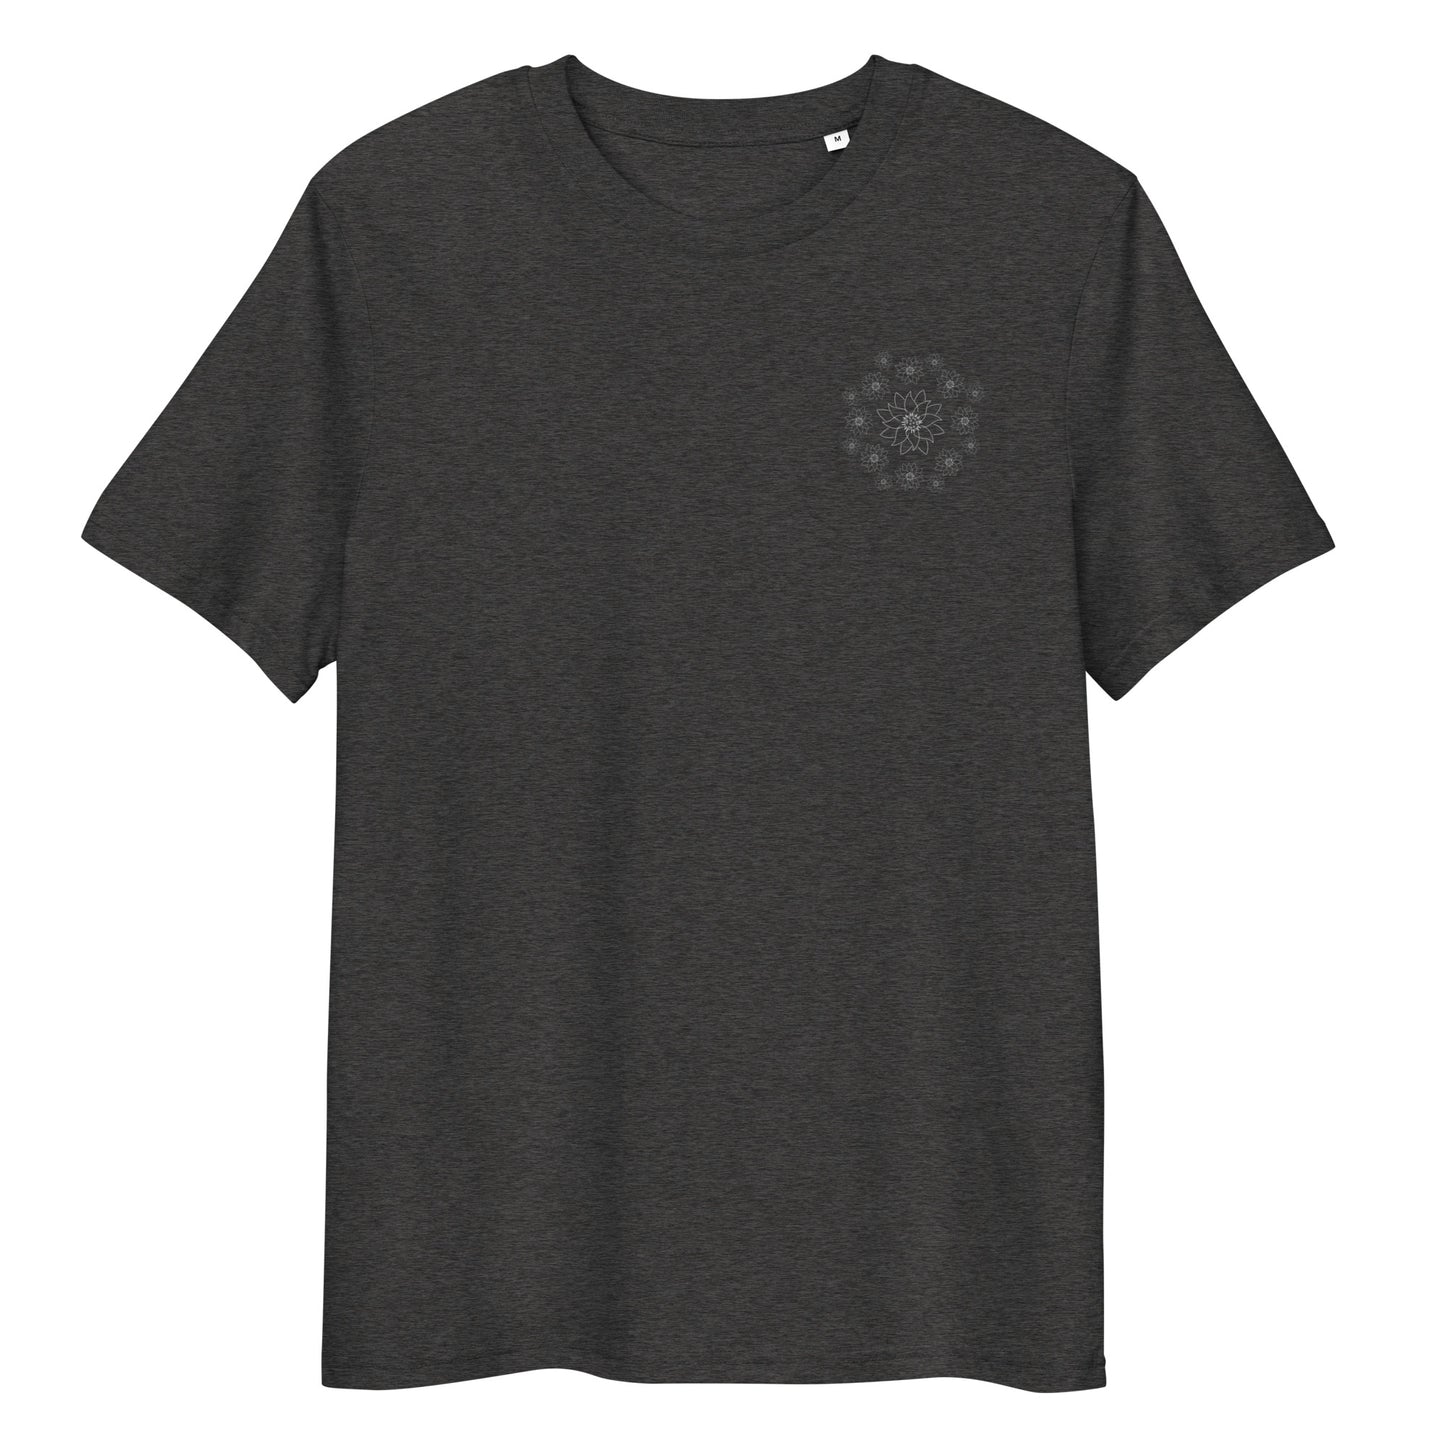 White Lotus Dream | 100% Organic Cotton T Shirt in dark heather